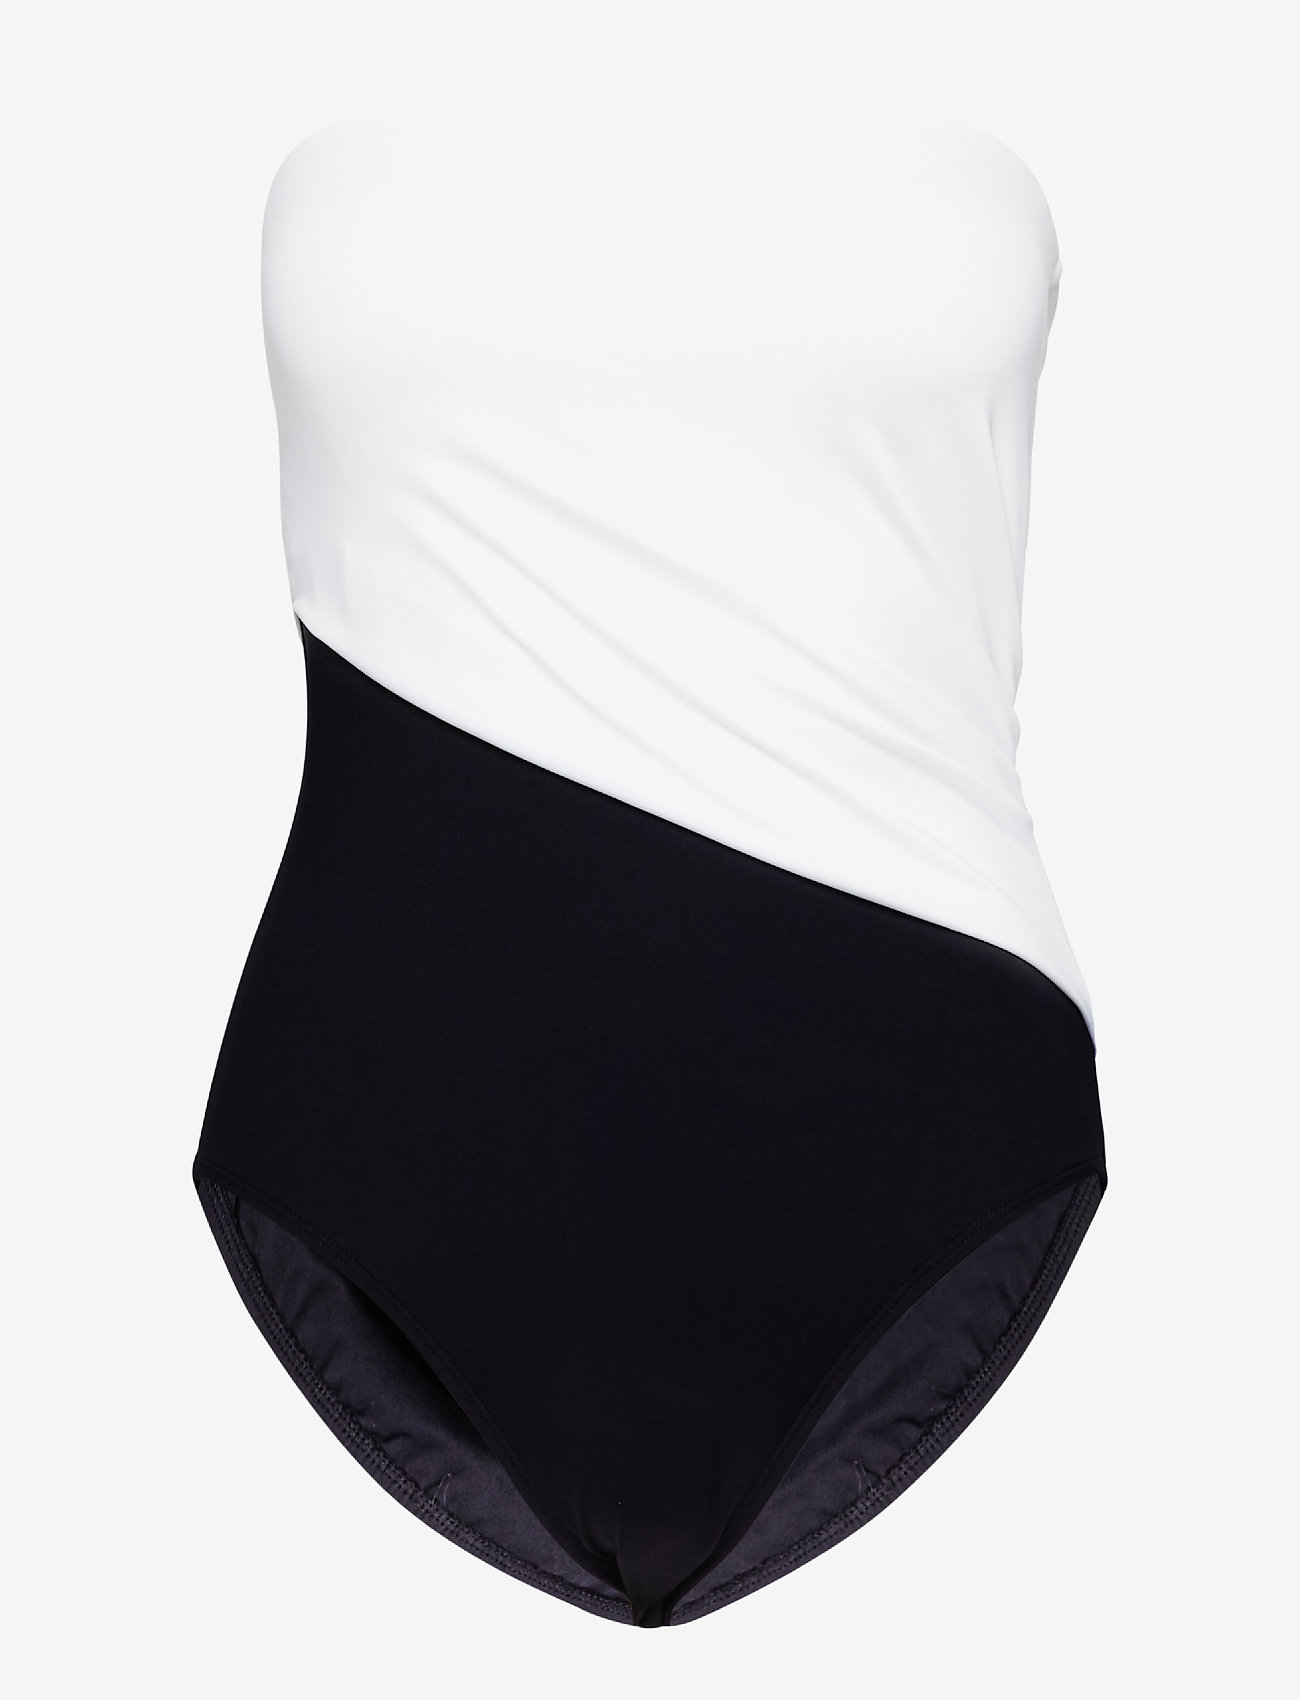 Bel Aire Bandeau 1pc (Black) (543.60 kr) - Lauren Ralph Lauren Swimwear